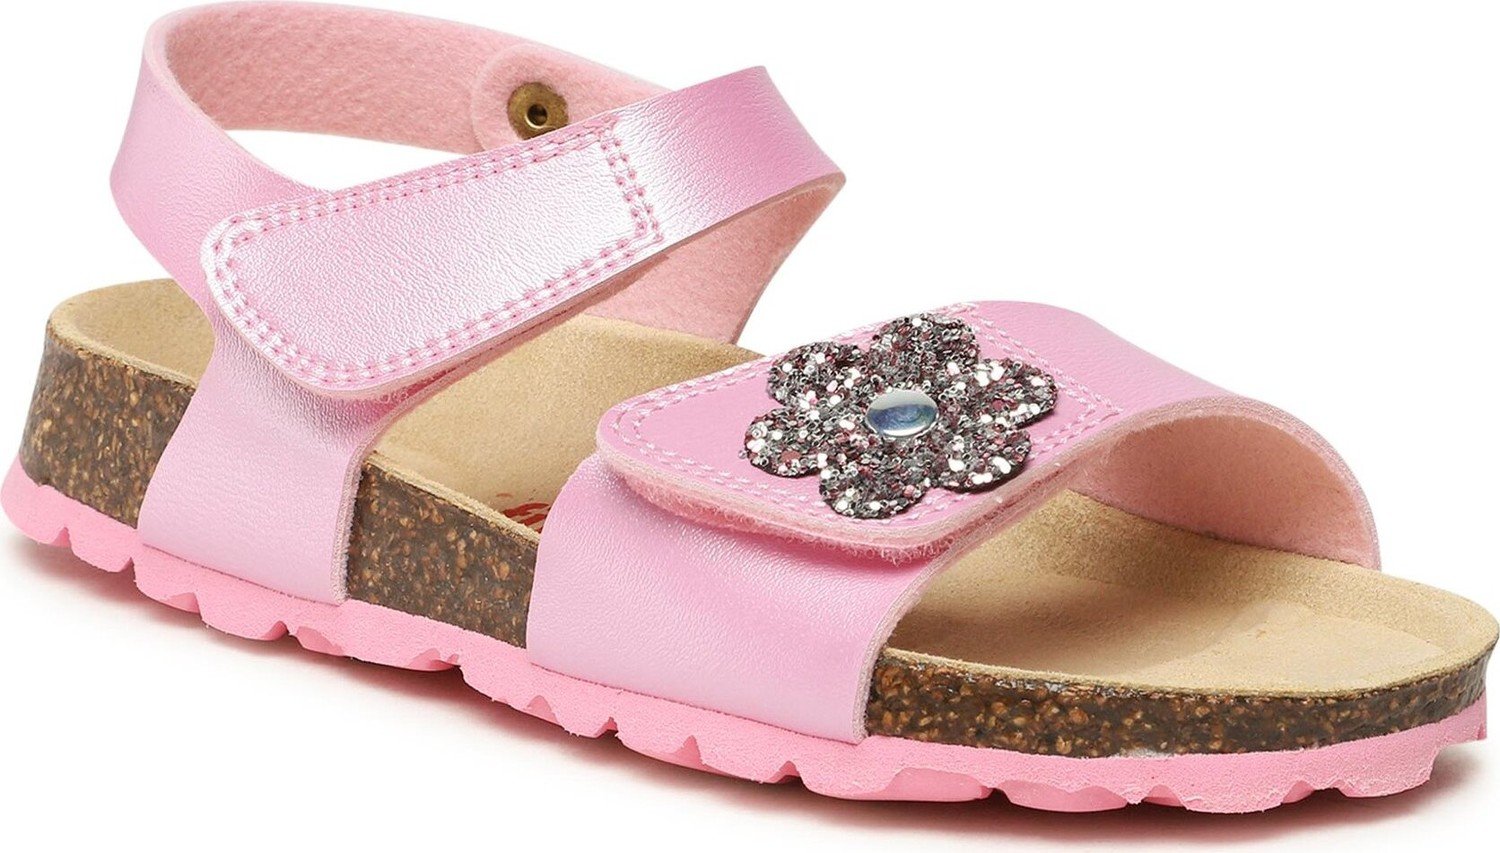 Sandály Superfit 1-000118-5500 S Pink